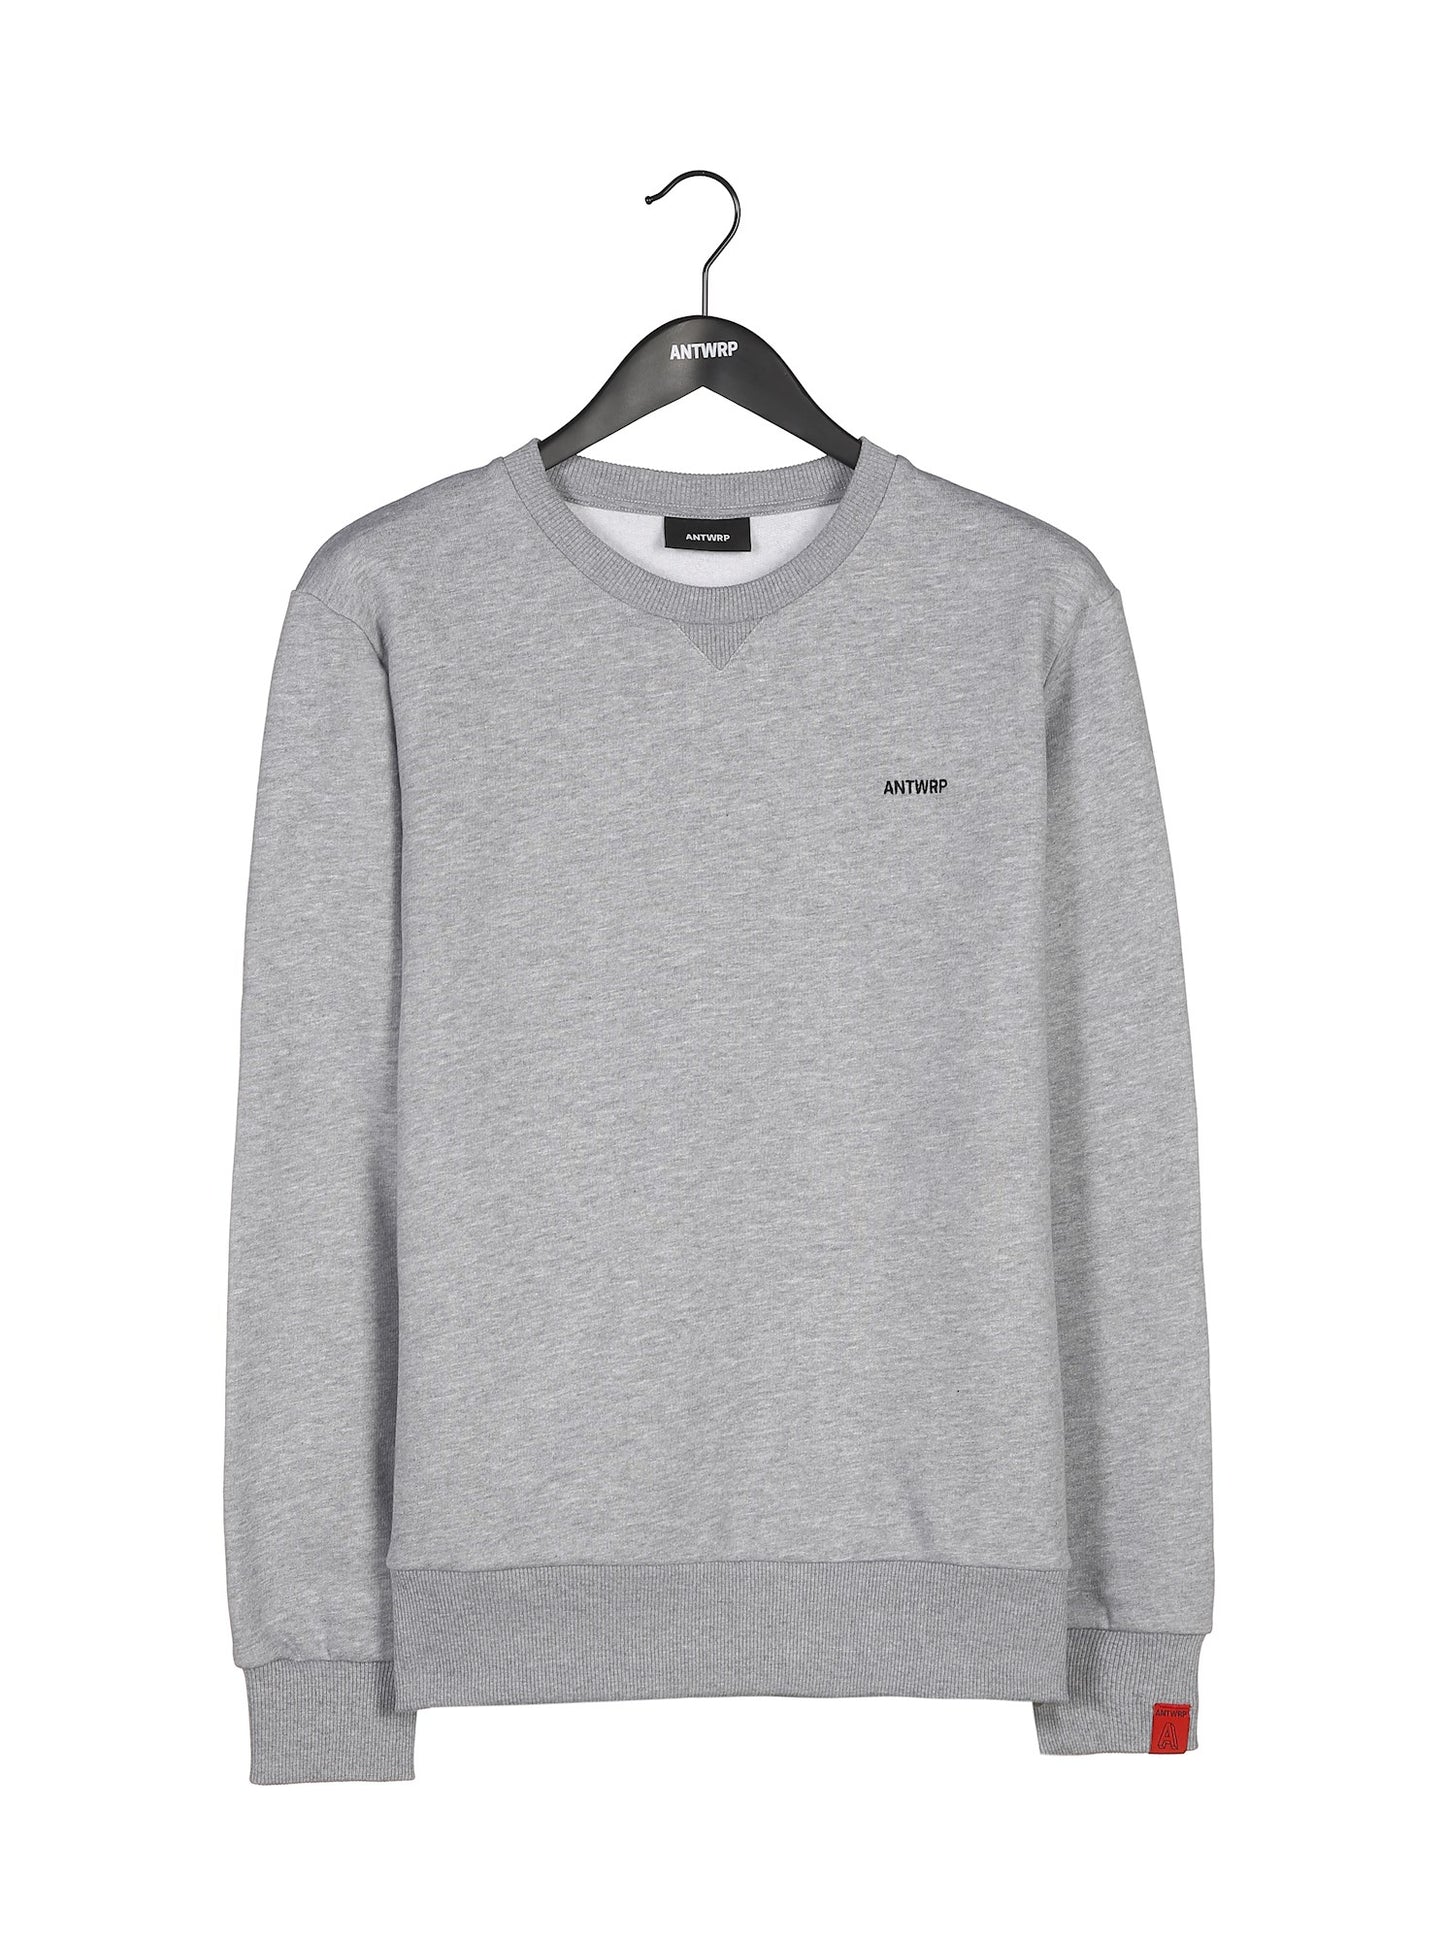 Sweatshirt grey chiné